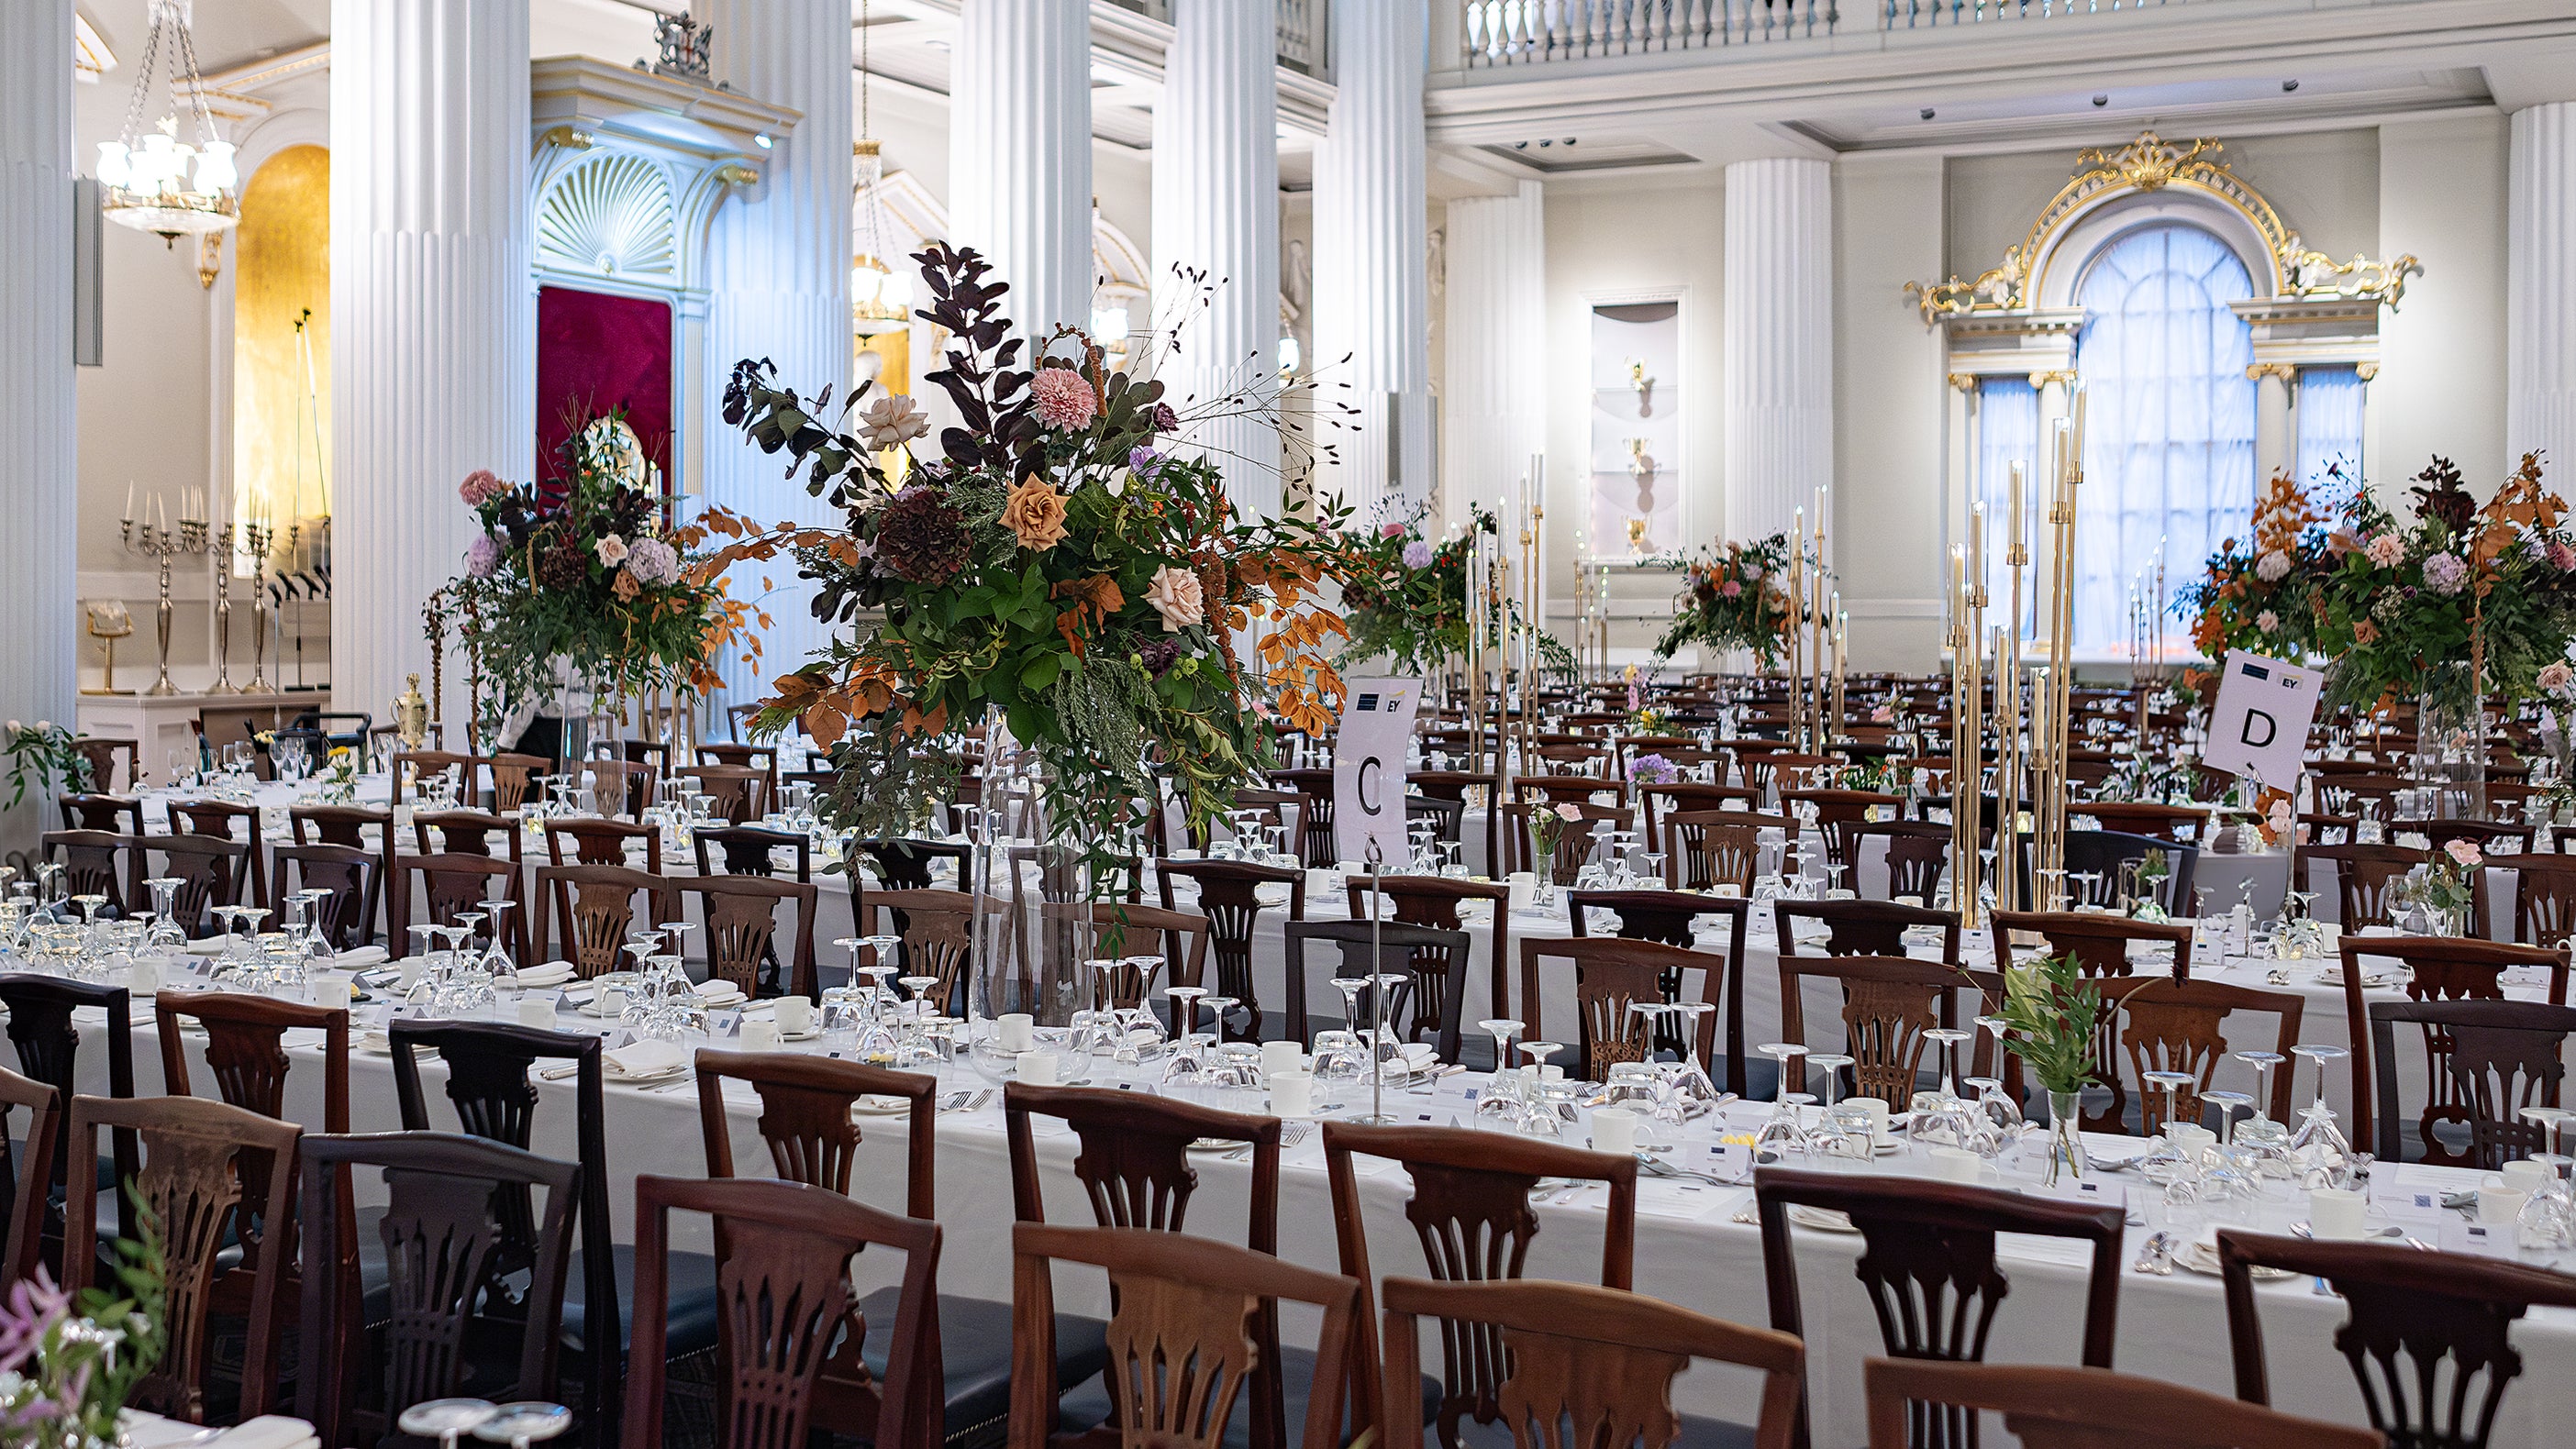 Elegant long tables adorned with exquisite floral arrangements